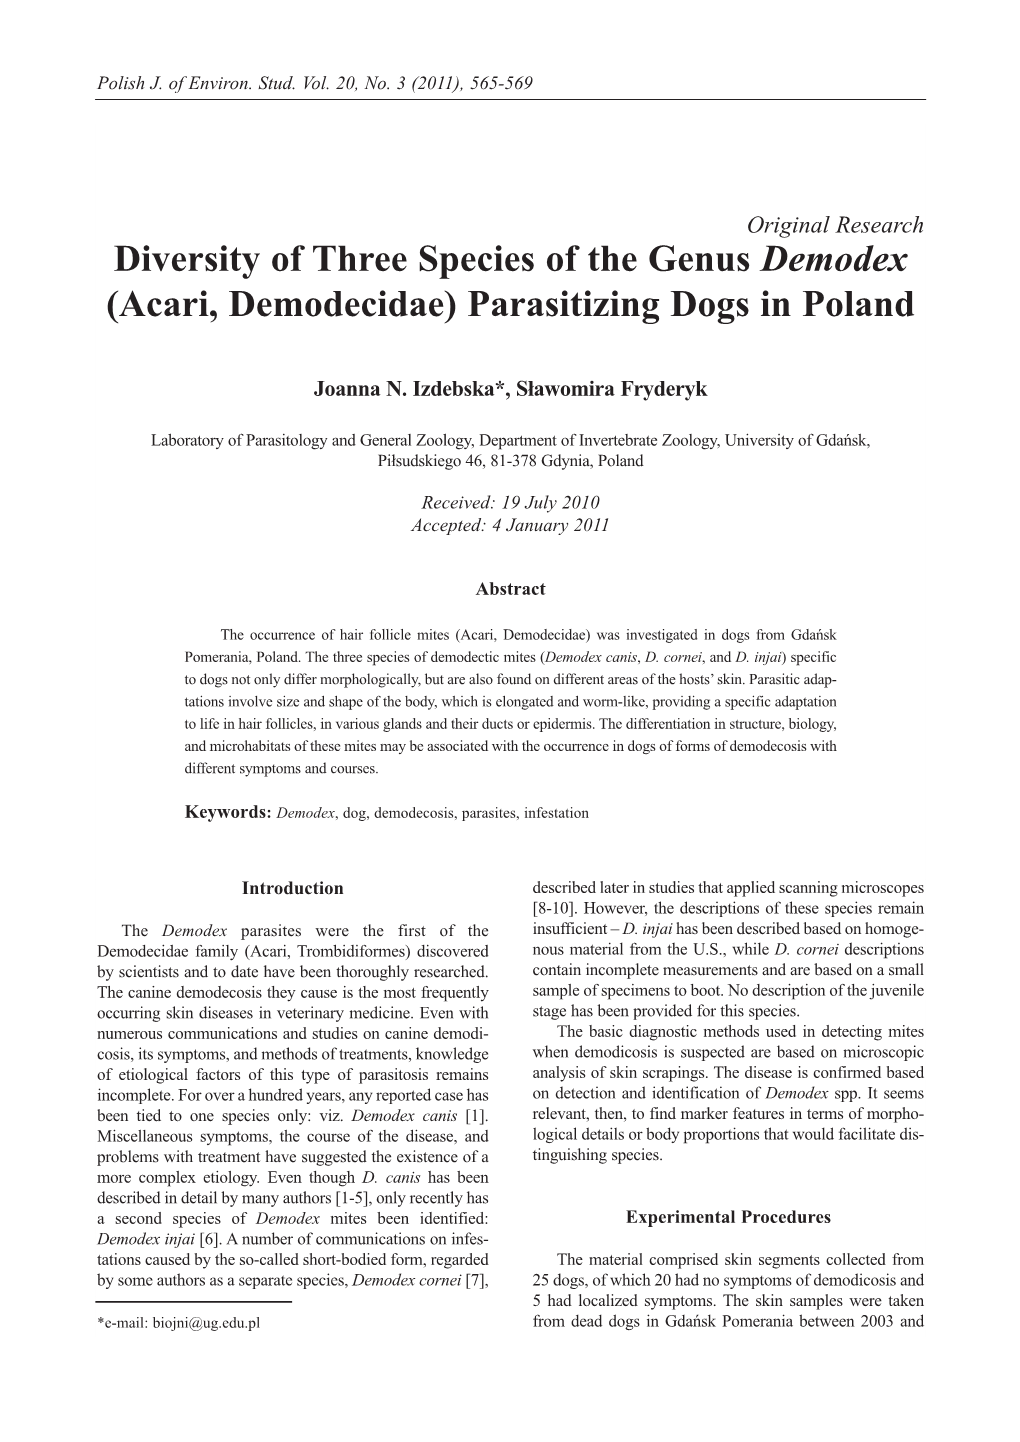 Diversity of Three Species of the Genus Demodex (Acari, Demodecidae) Parasitizing Dogs in Poland